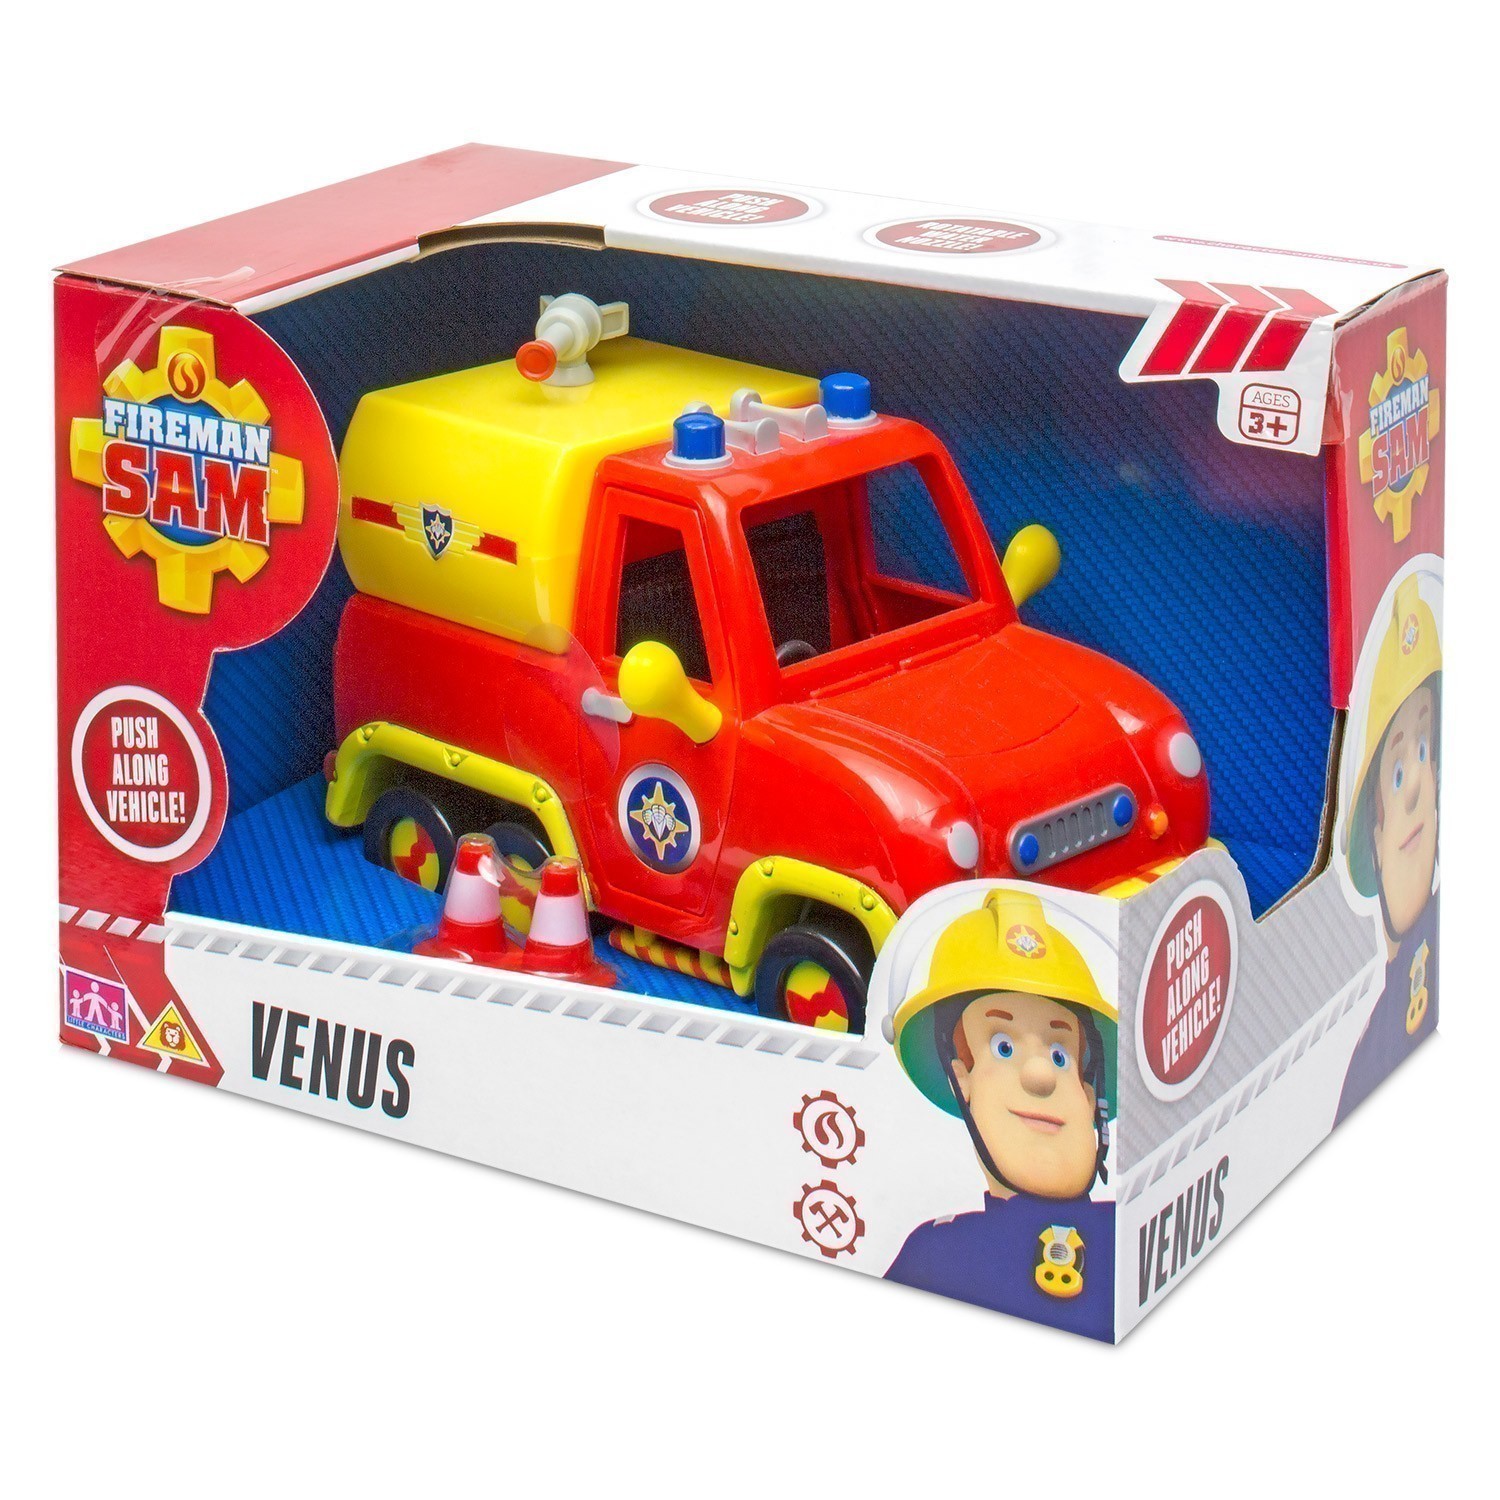 Fireman Sam - Venus Vehicle